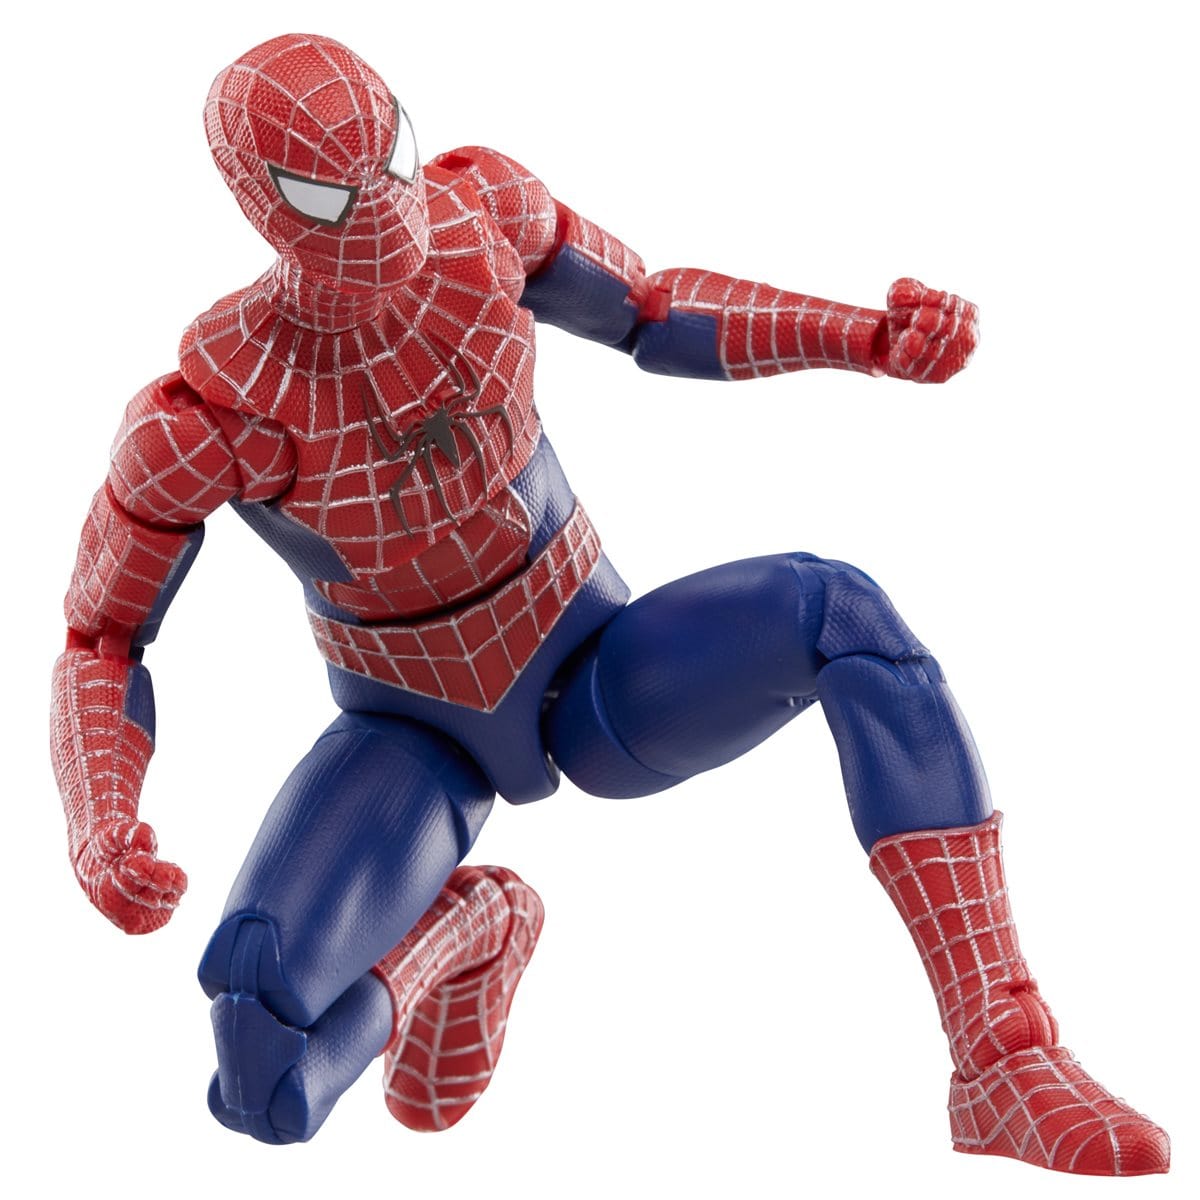 Funkoinfo_ on Instagram: Up close look at Marvel Legends No Way Home  Spider-Man & Spider-Man 2 Doc Ock Figure! Credit: @Dunyunistrying  #spiderman #tomholland #doctoroctopus #marvel #marvelstudios